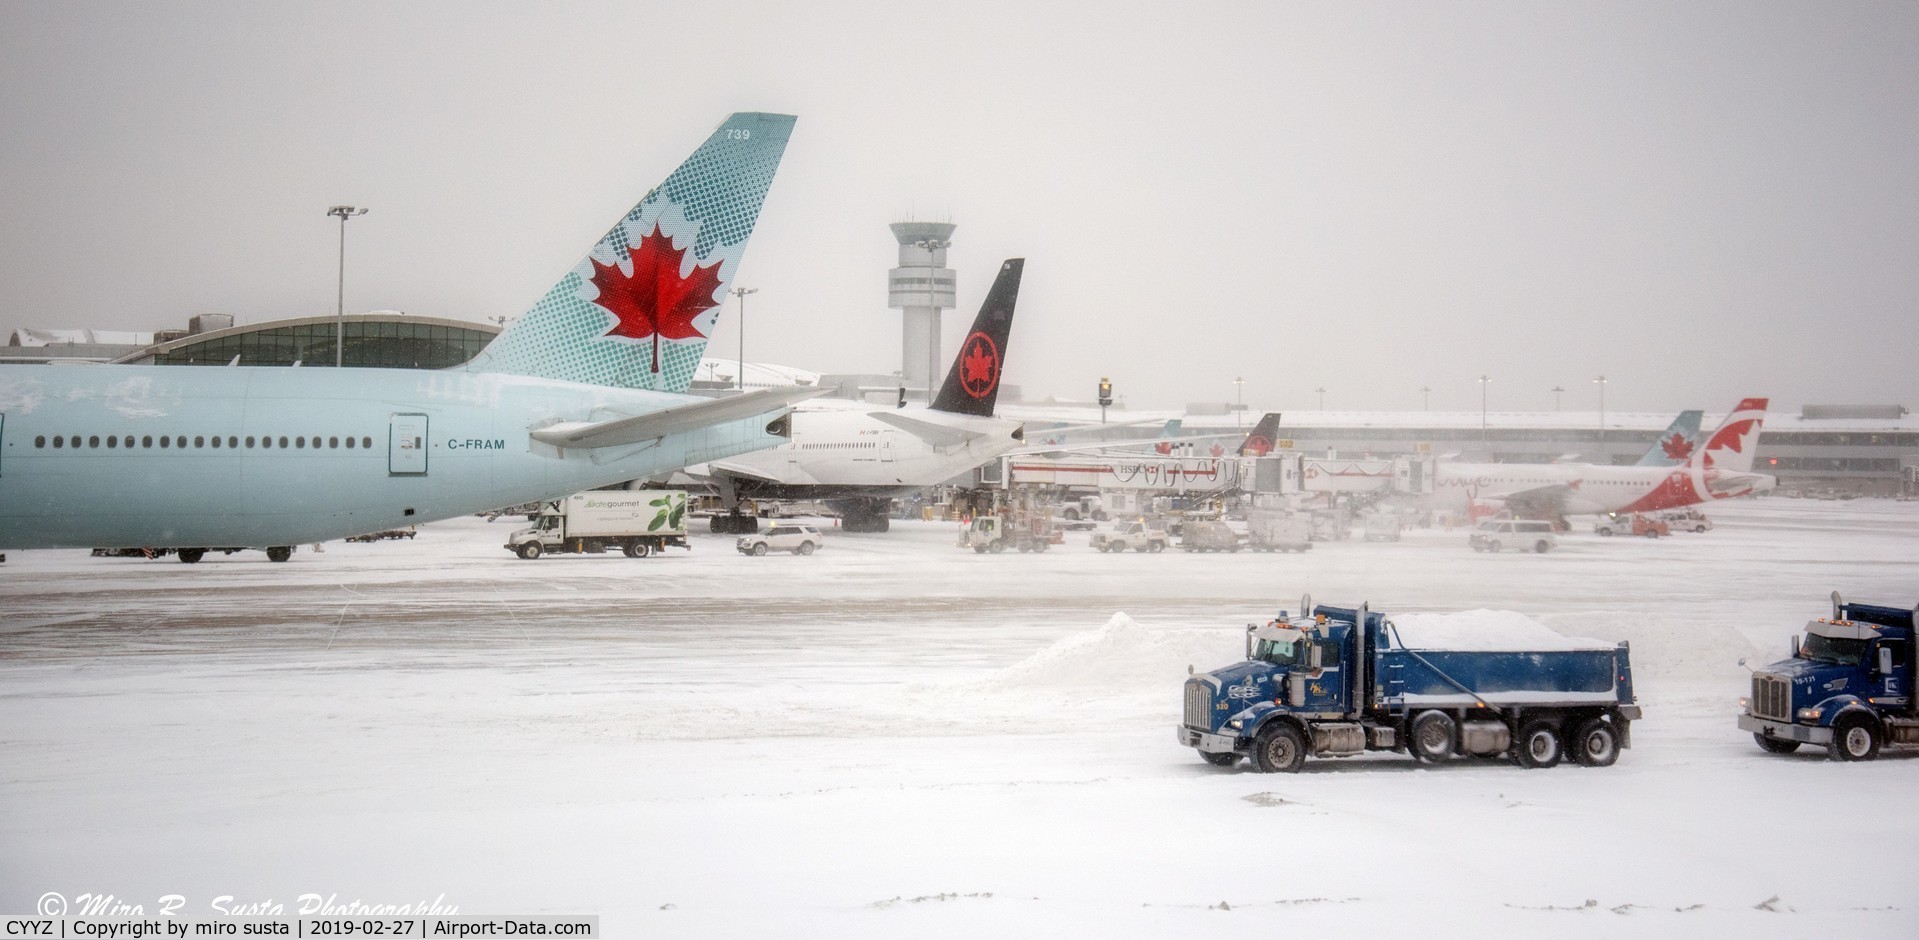 Toronto Pearson International Airport (Toronto/Lester B. Pearson International Airport, Pearson Airport), Toronto, Ontario Canada (CYYZ) - Toronto Pearson International Airport, winter activities.